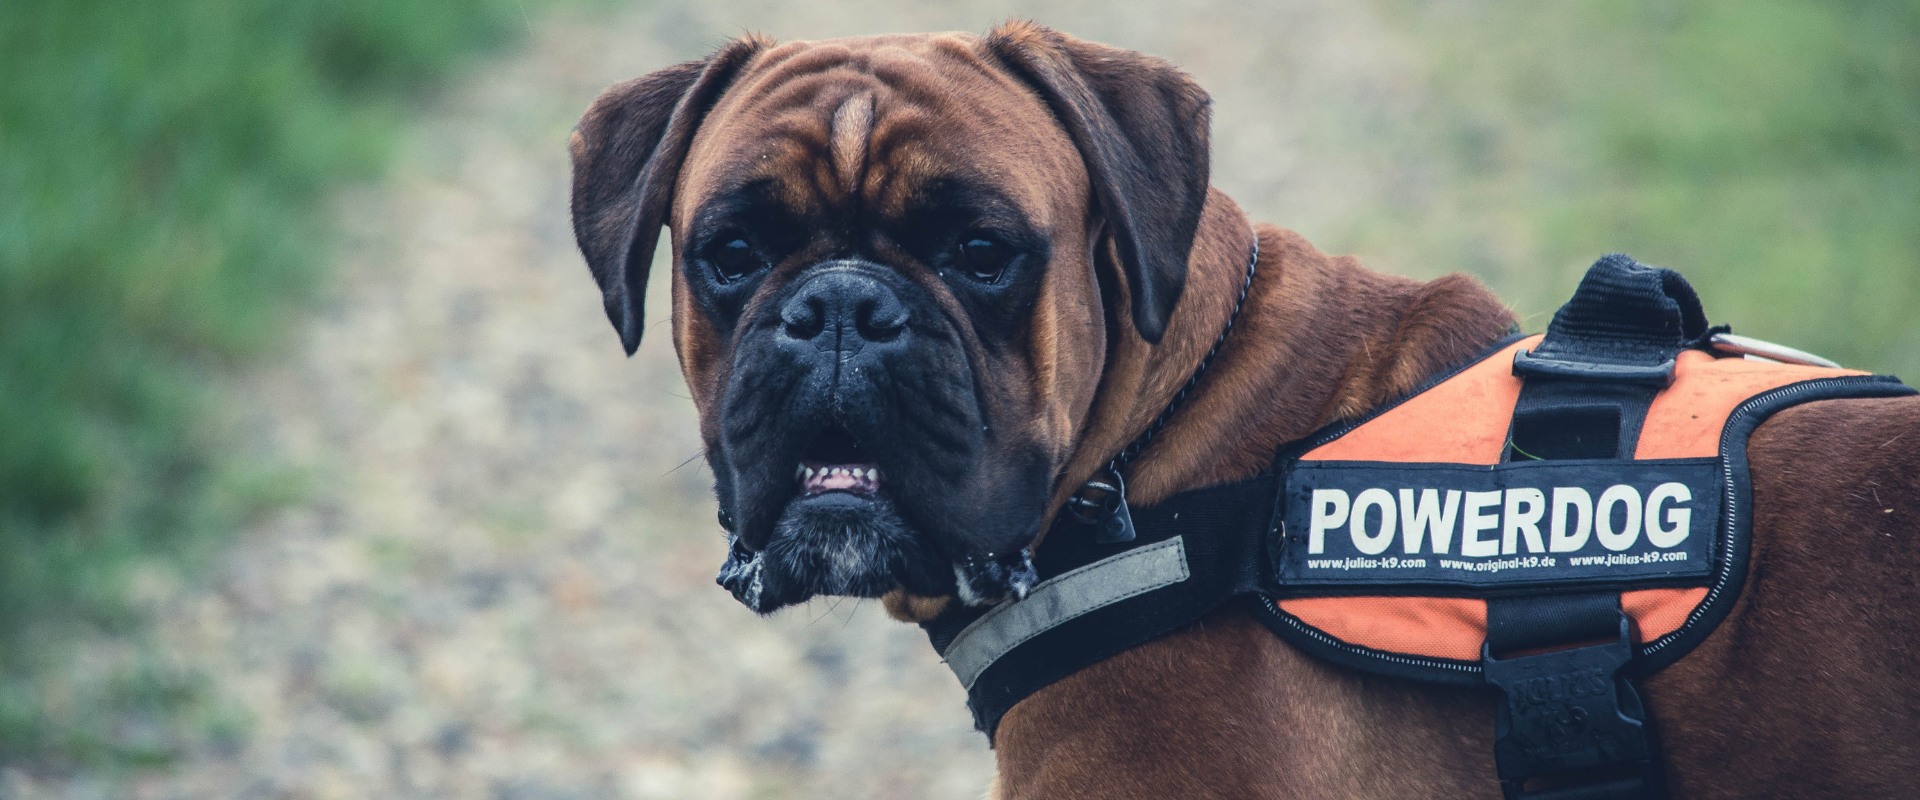 vest for dog training